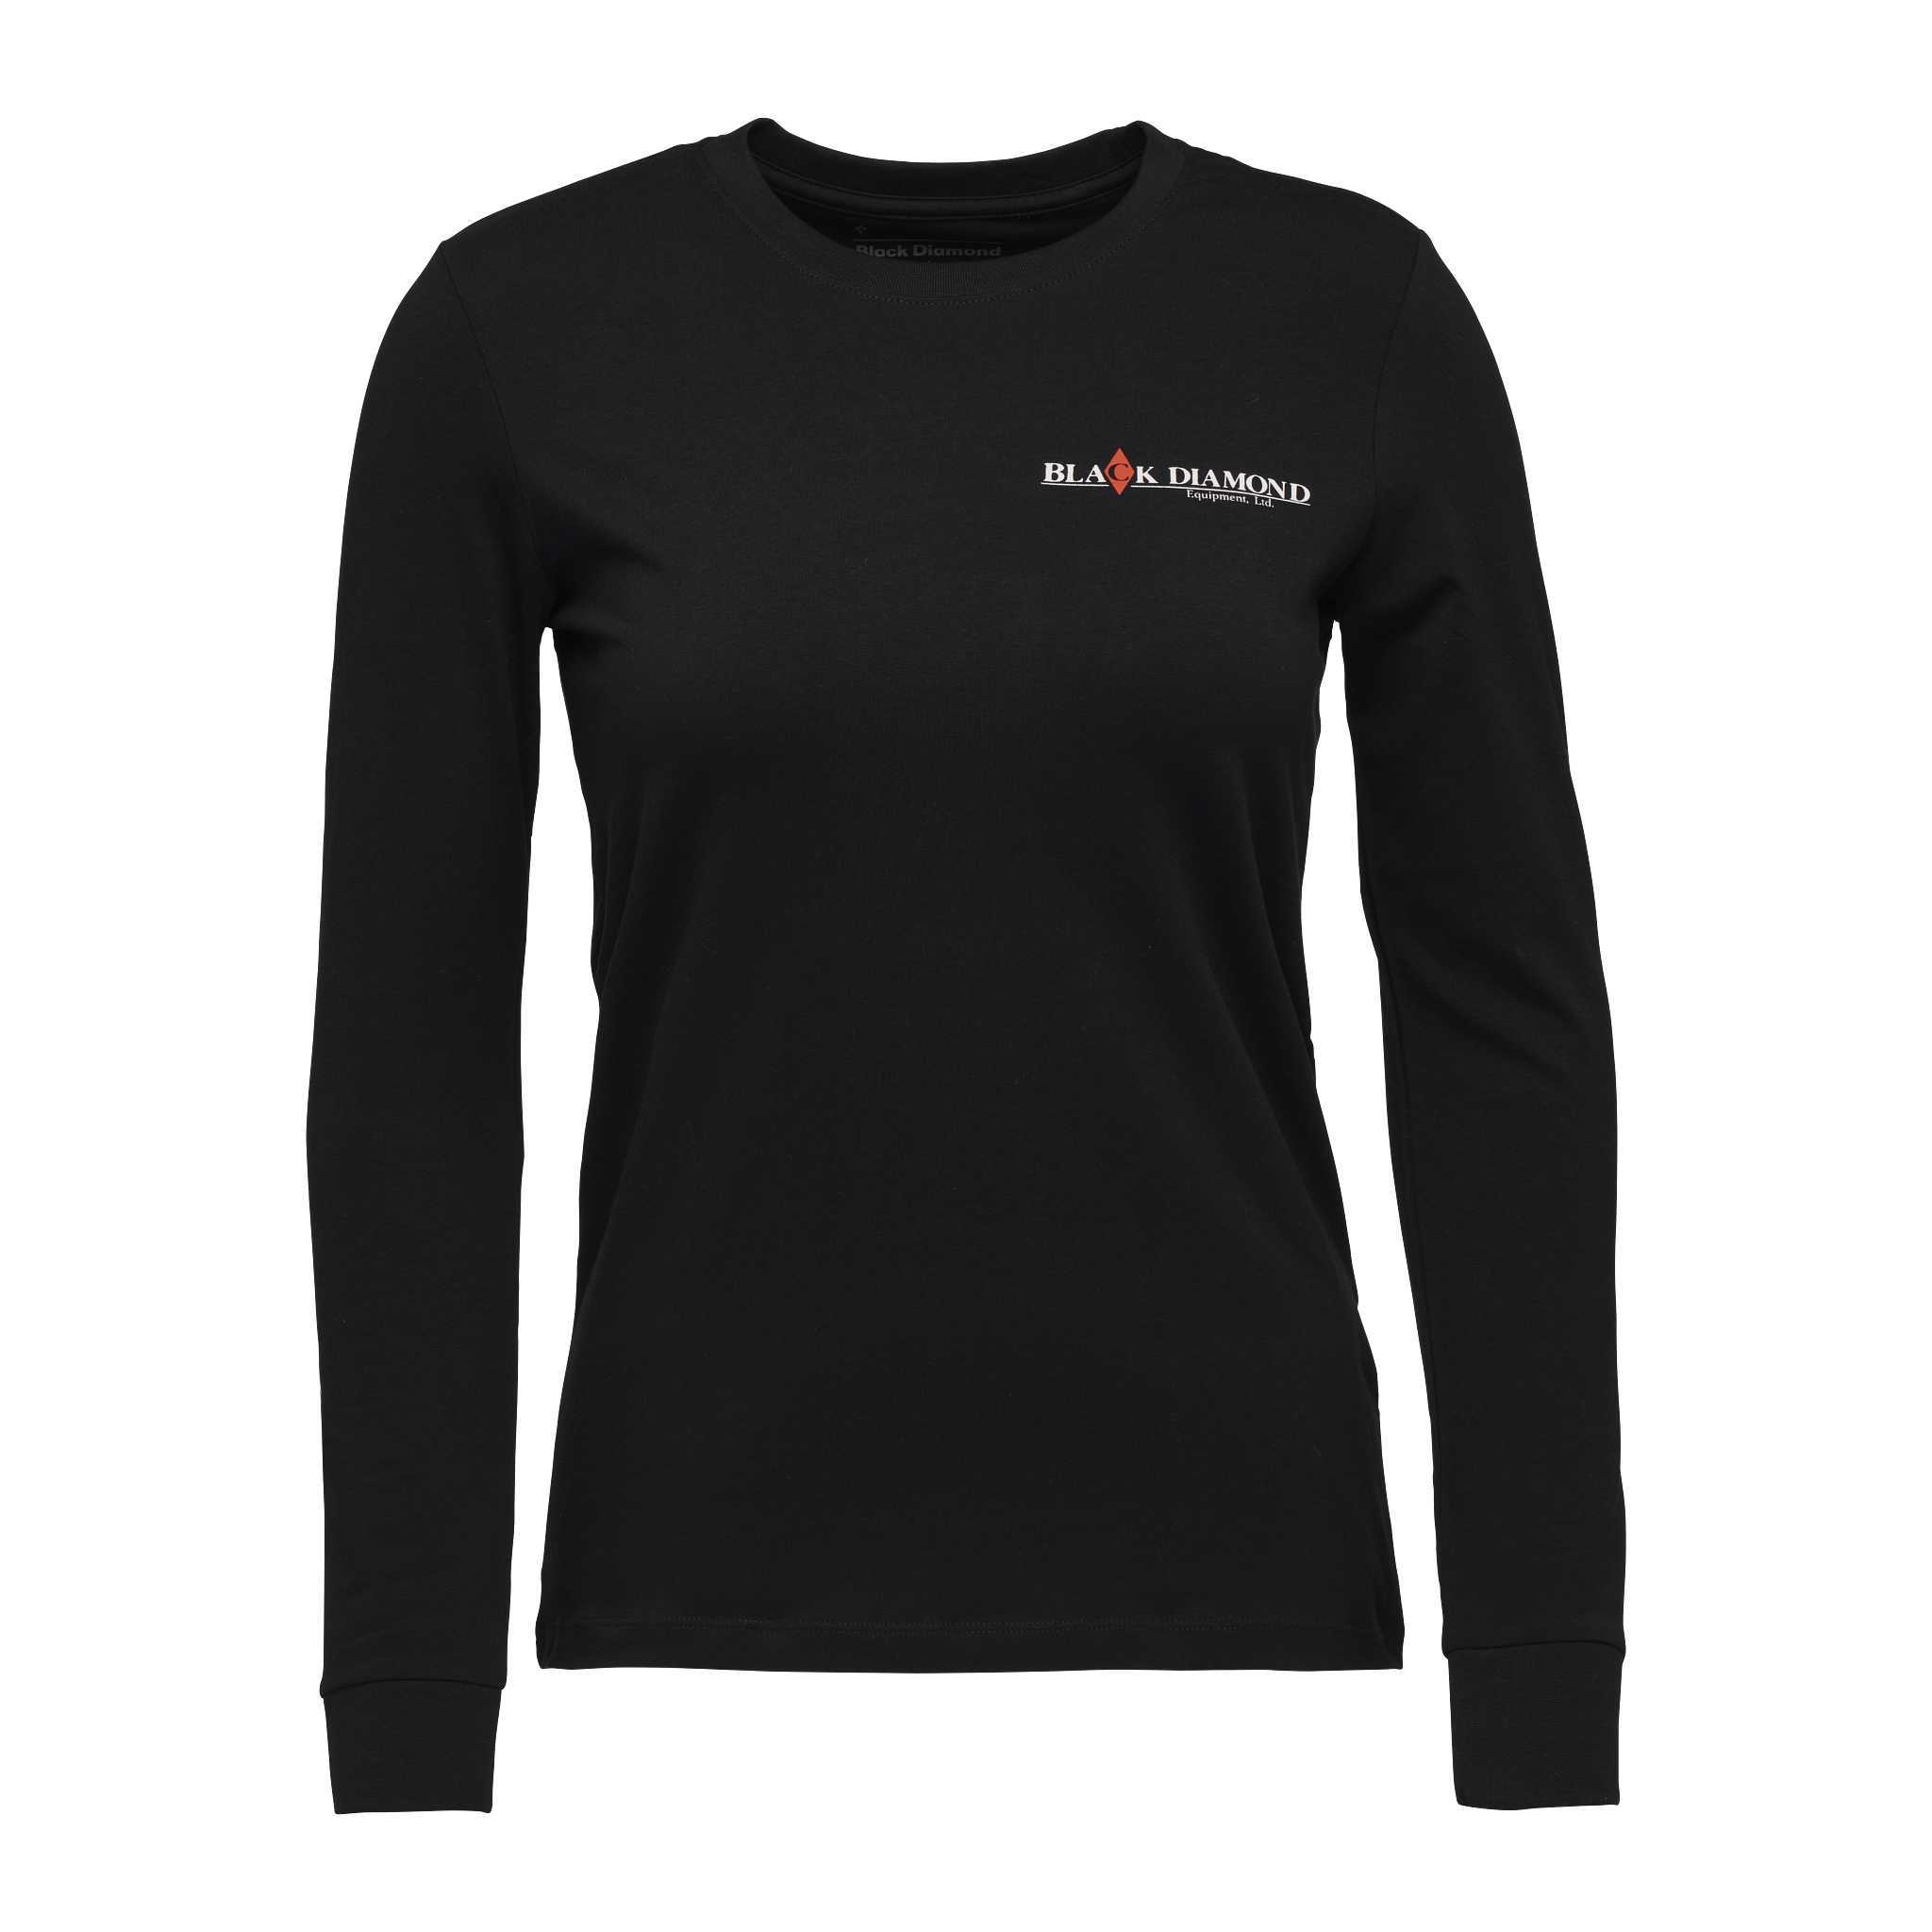 Hemp Clothing Long Sleeve Black Shirt – Field Trip Balhannah